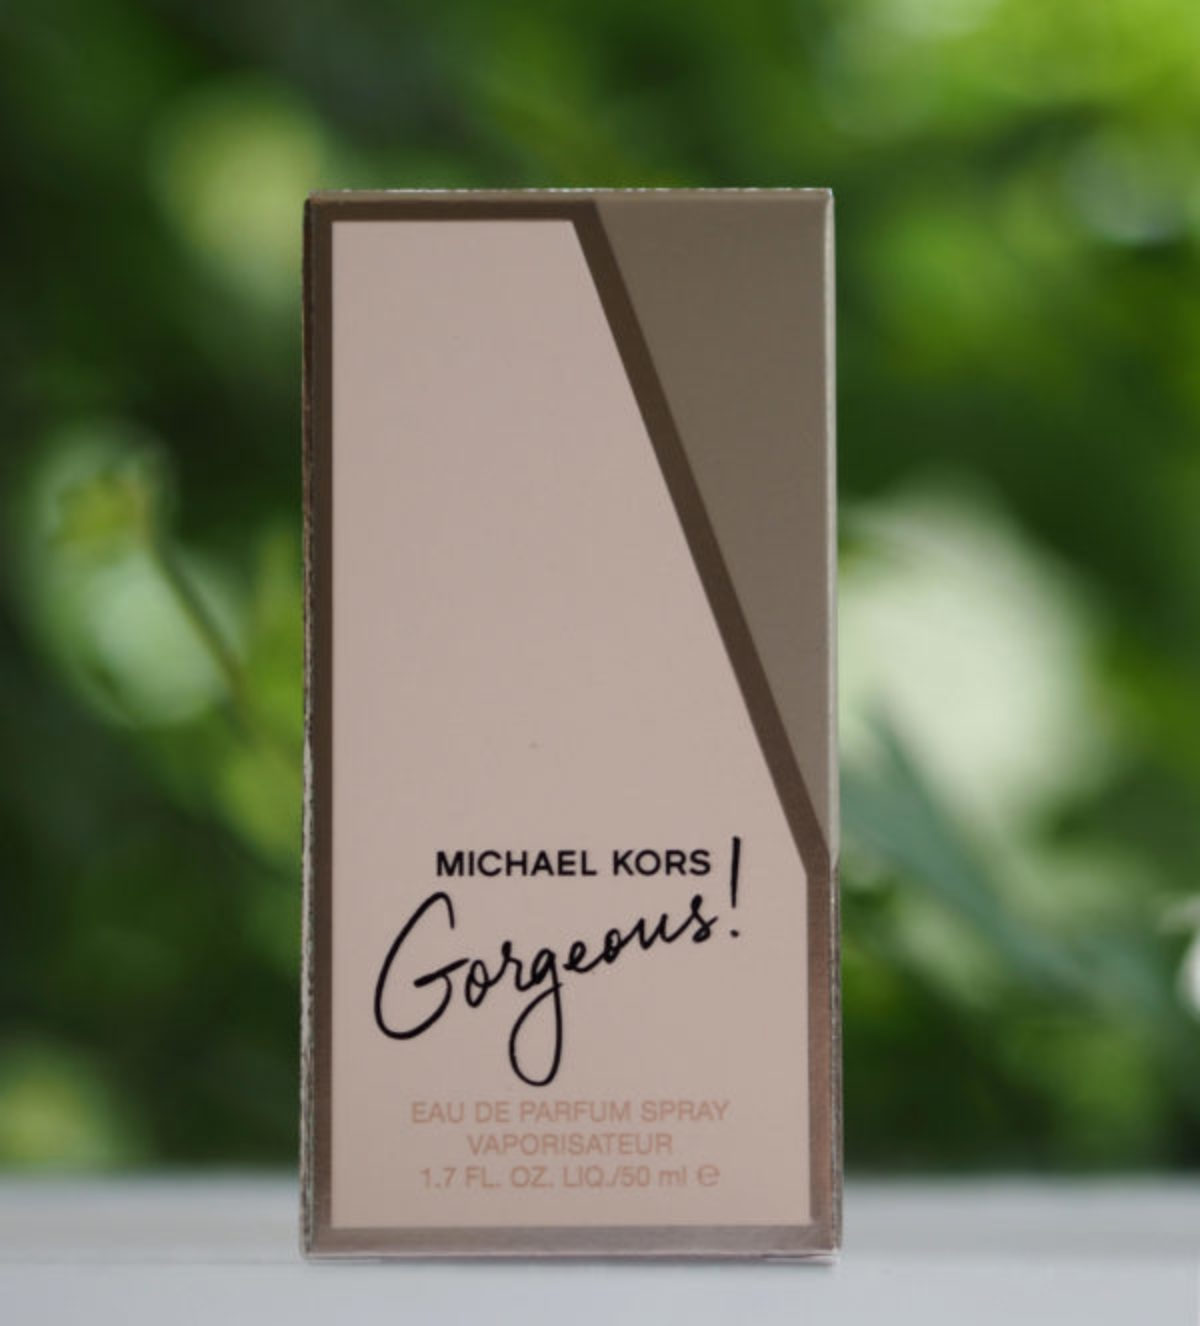 Regulatie Dierentuin s nachts heel Michael Kors Gorgeous! Fragrance | British Beauty Blogger